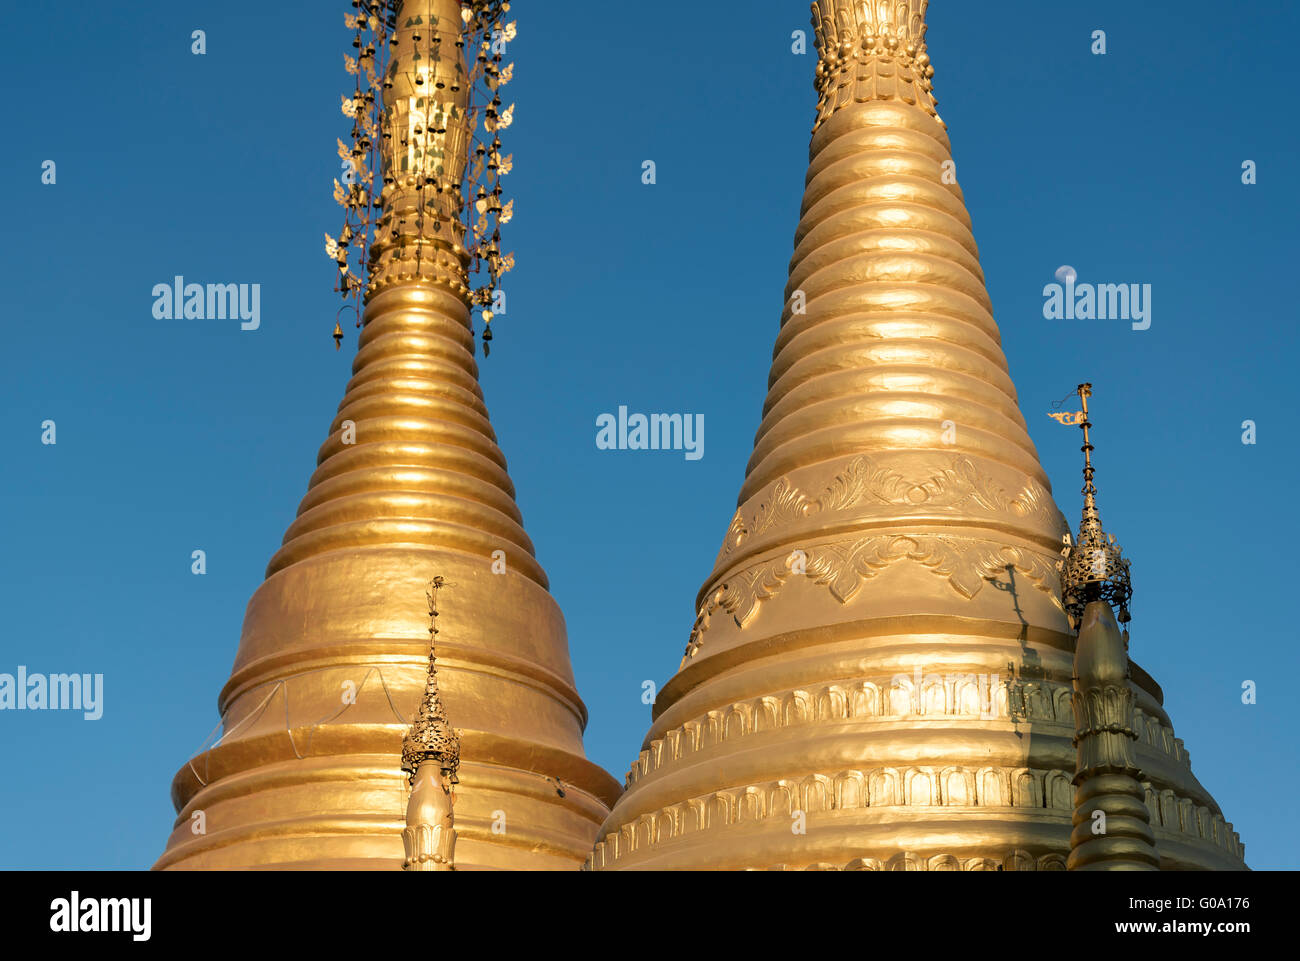 Golden stupas at Nigyon Taungyon Kyaung Temple, Nyaungshwe (Nyaung Shwe), Burma (Myanmar) Stock Photo